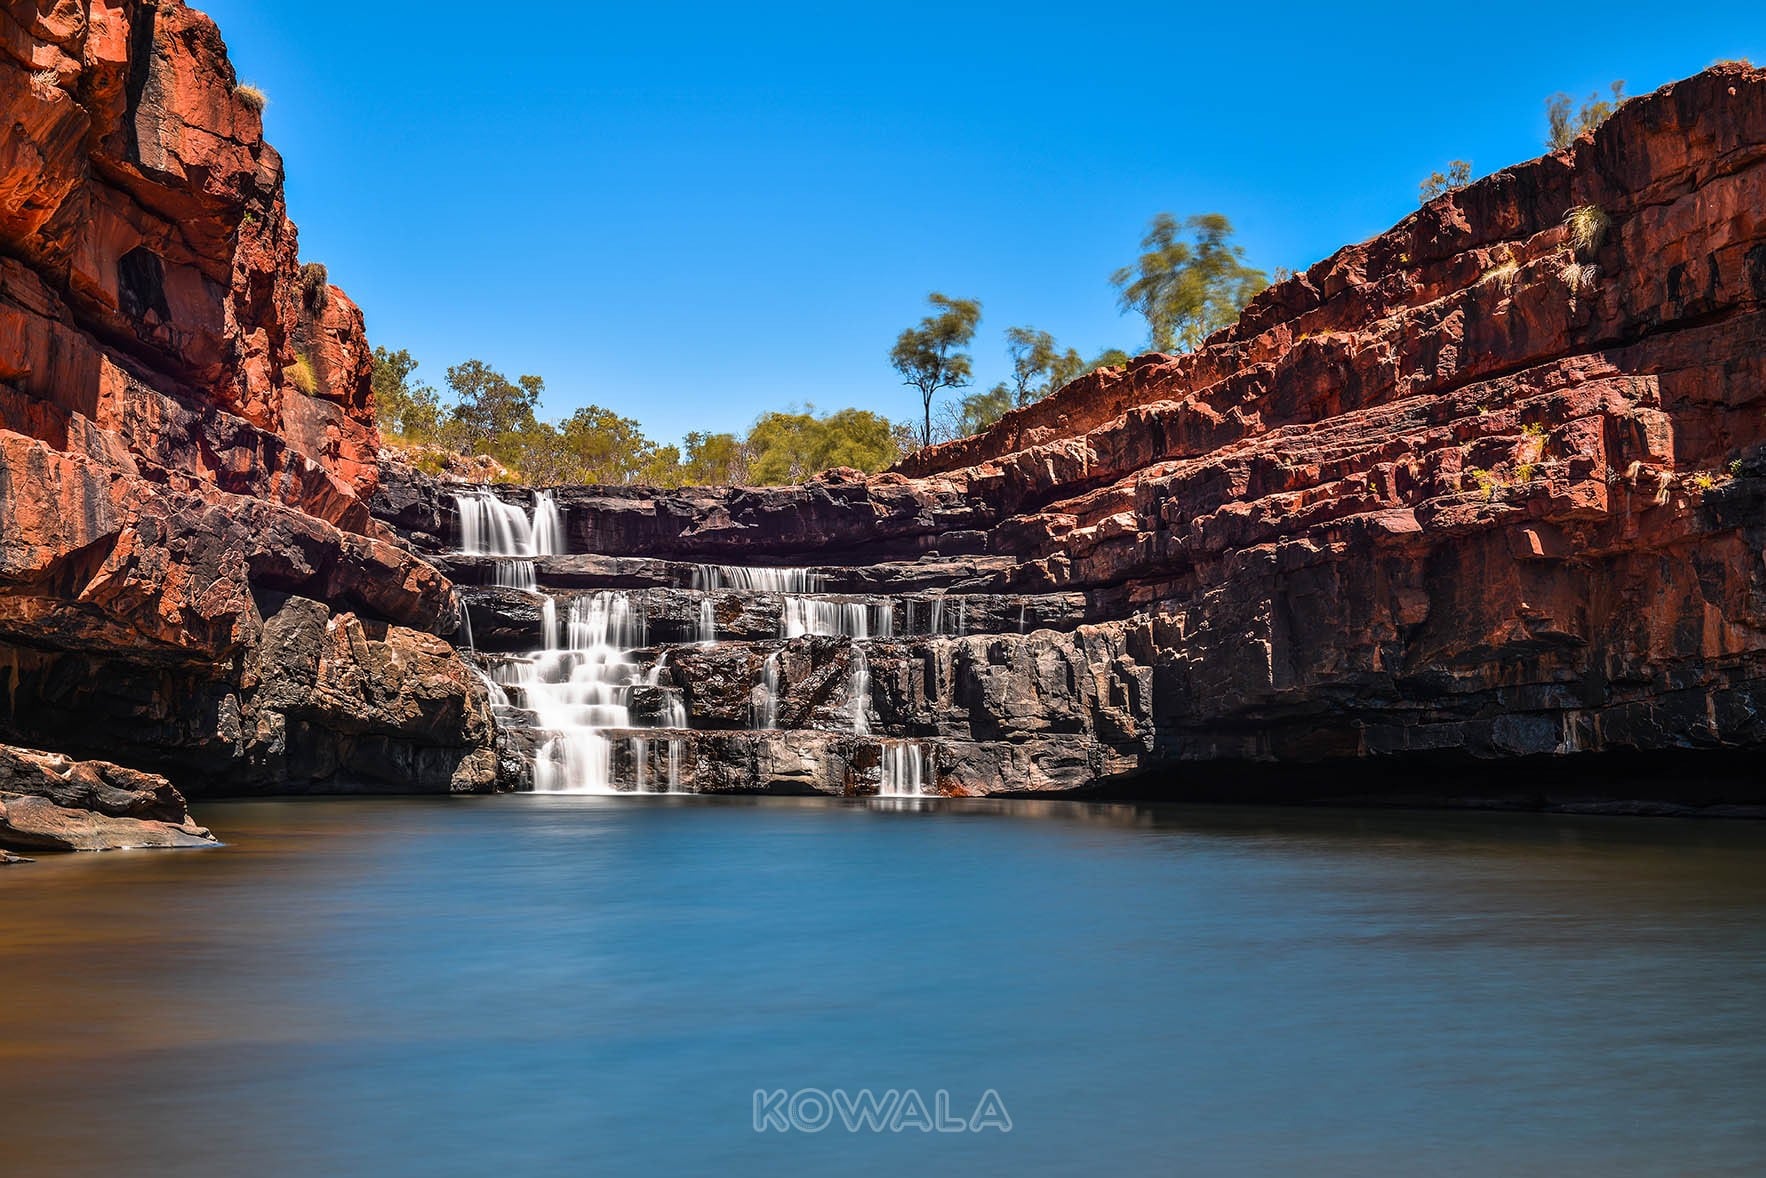 Bell gorge kimberley wa australia australie gibb river road GRR road trip backpacker pvt whv waterfall cascade water